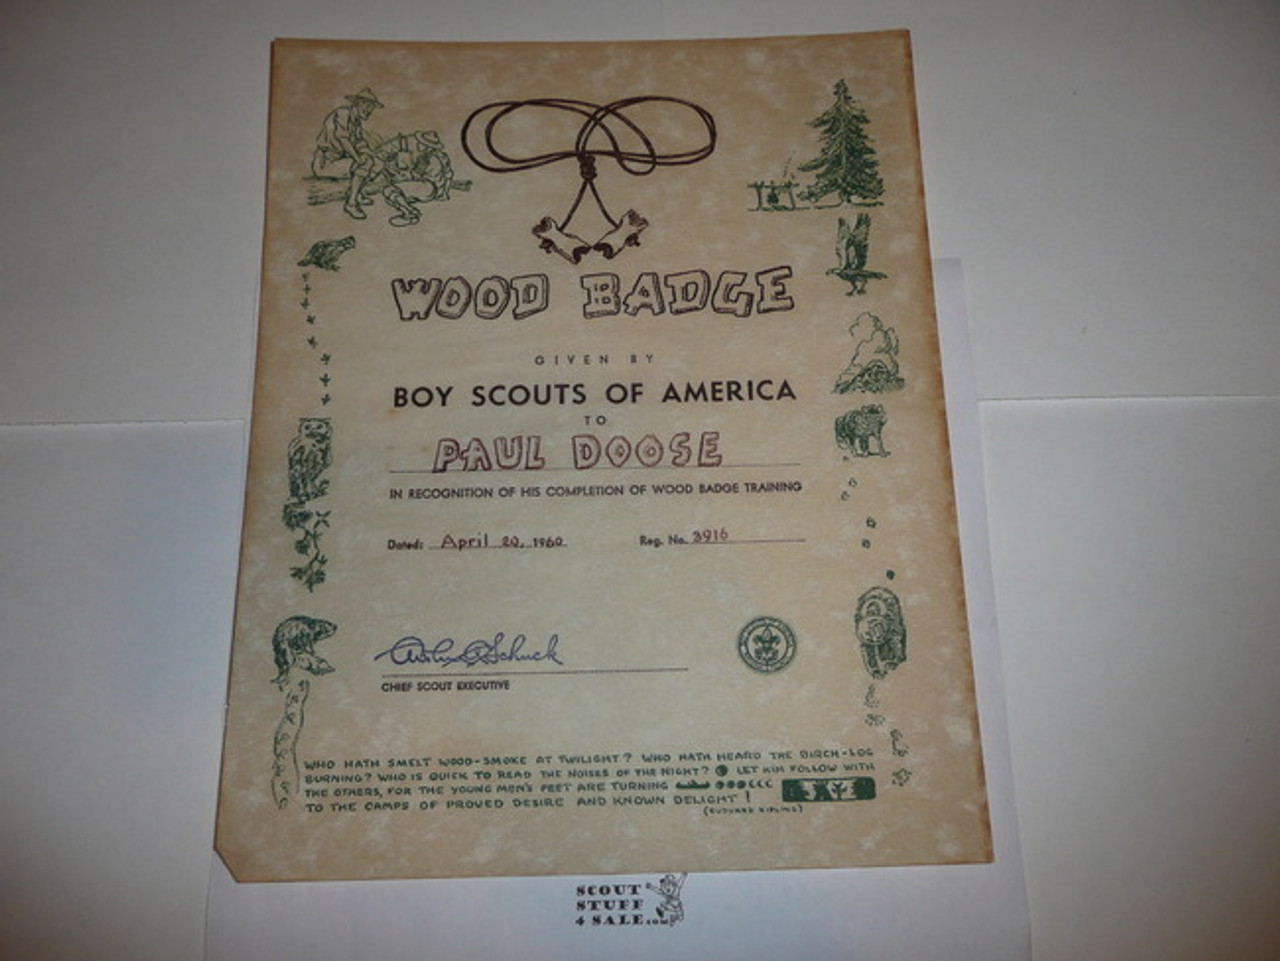 1960 Wood Badge Training Certificate, Presented